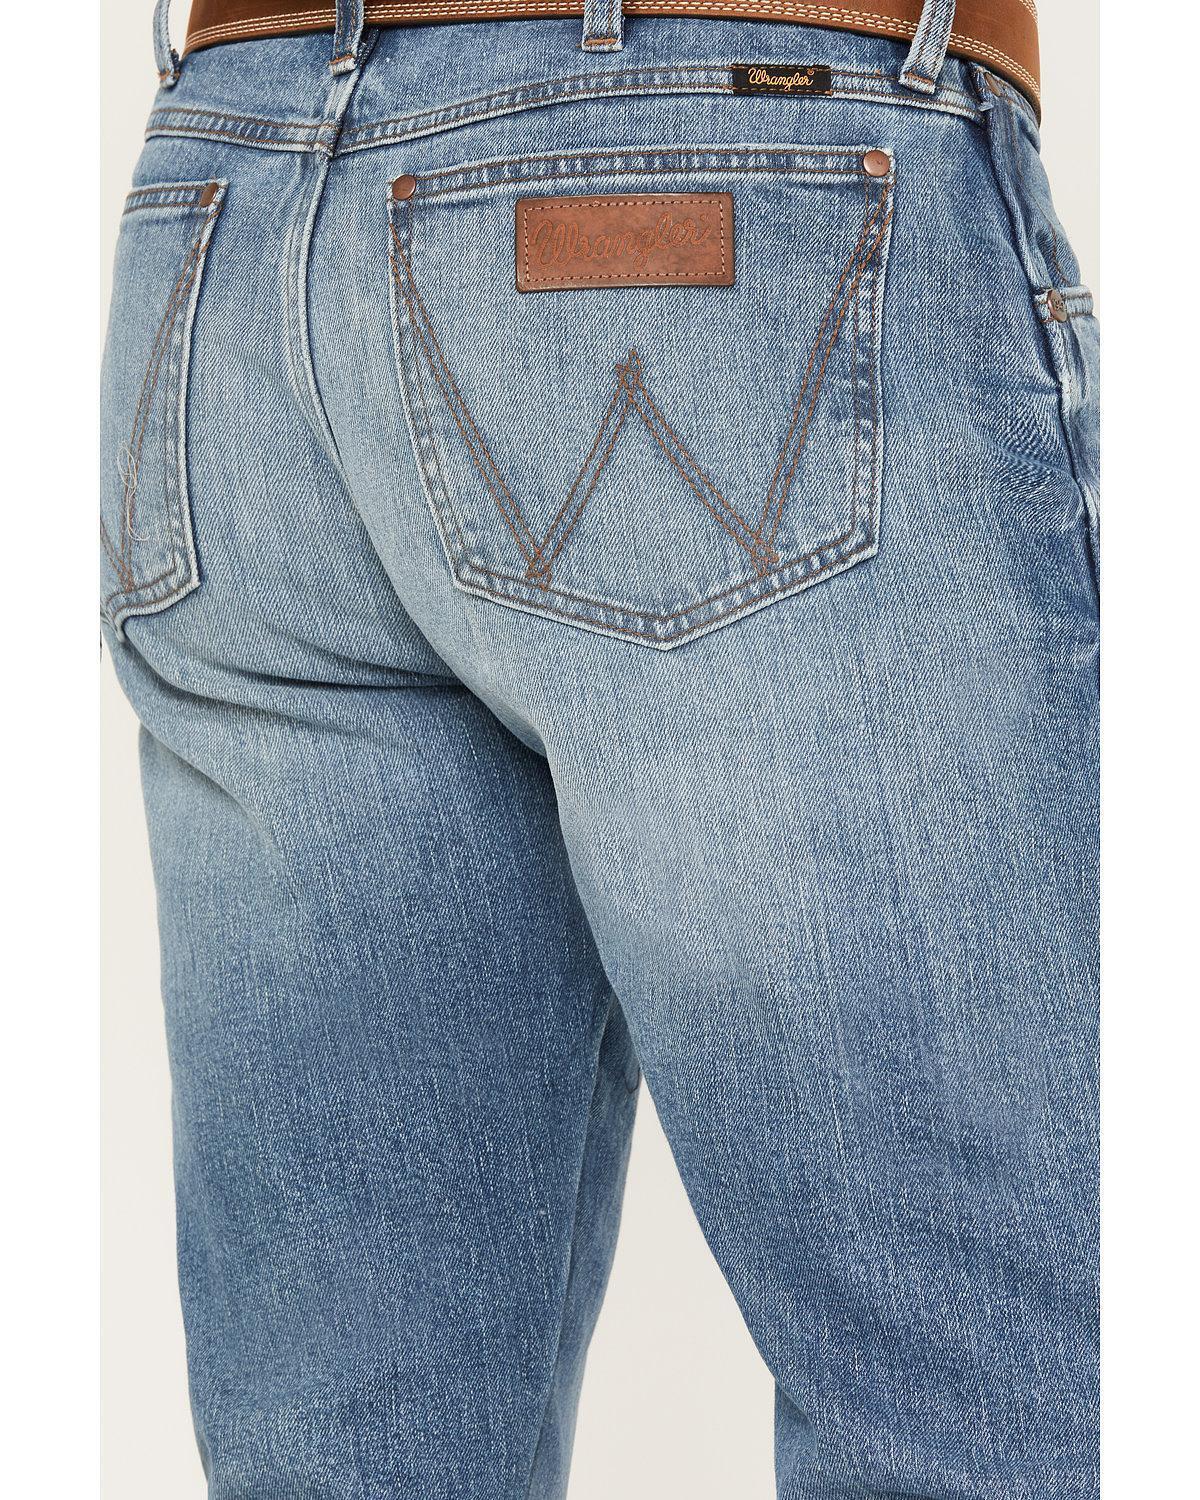 Wrangler Men's Retro 77Mwp Medium Wash Slim Boot Stretch Denim Jeans Light